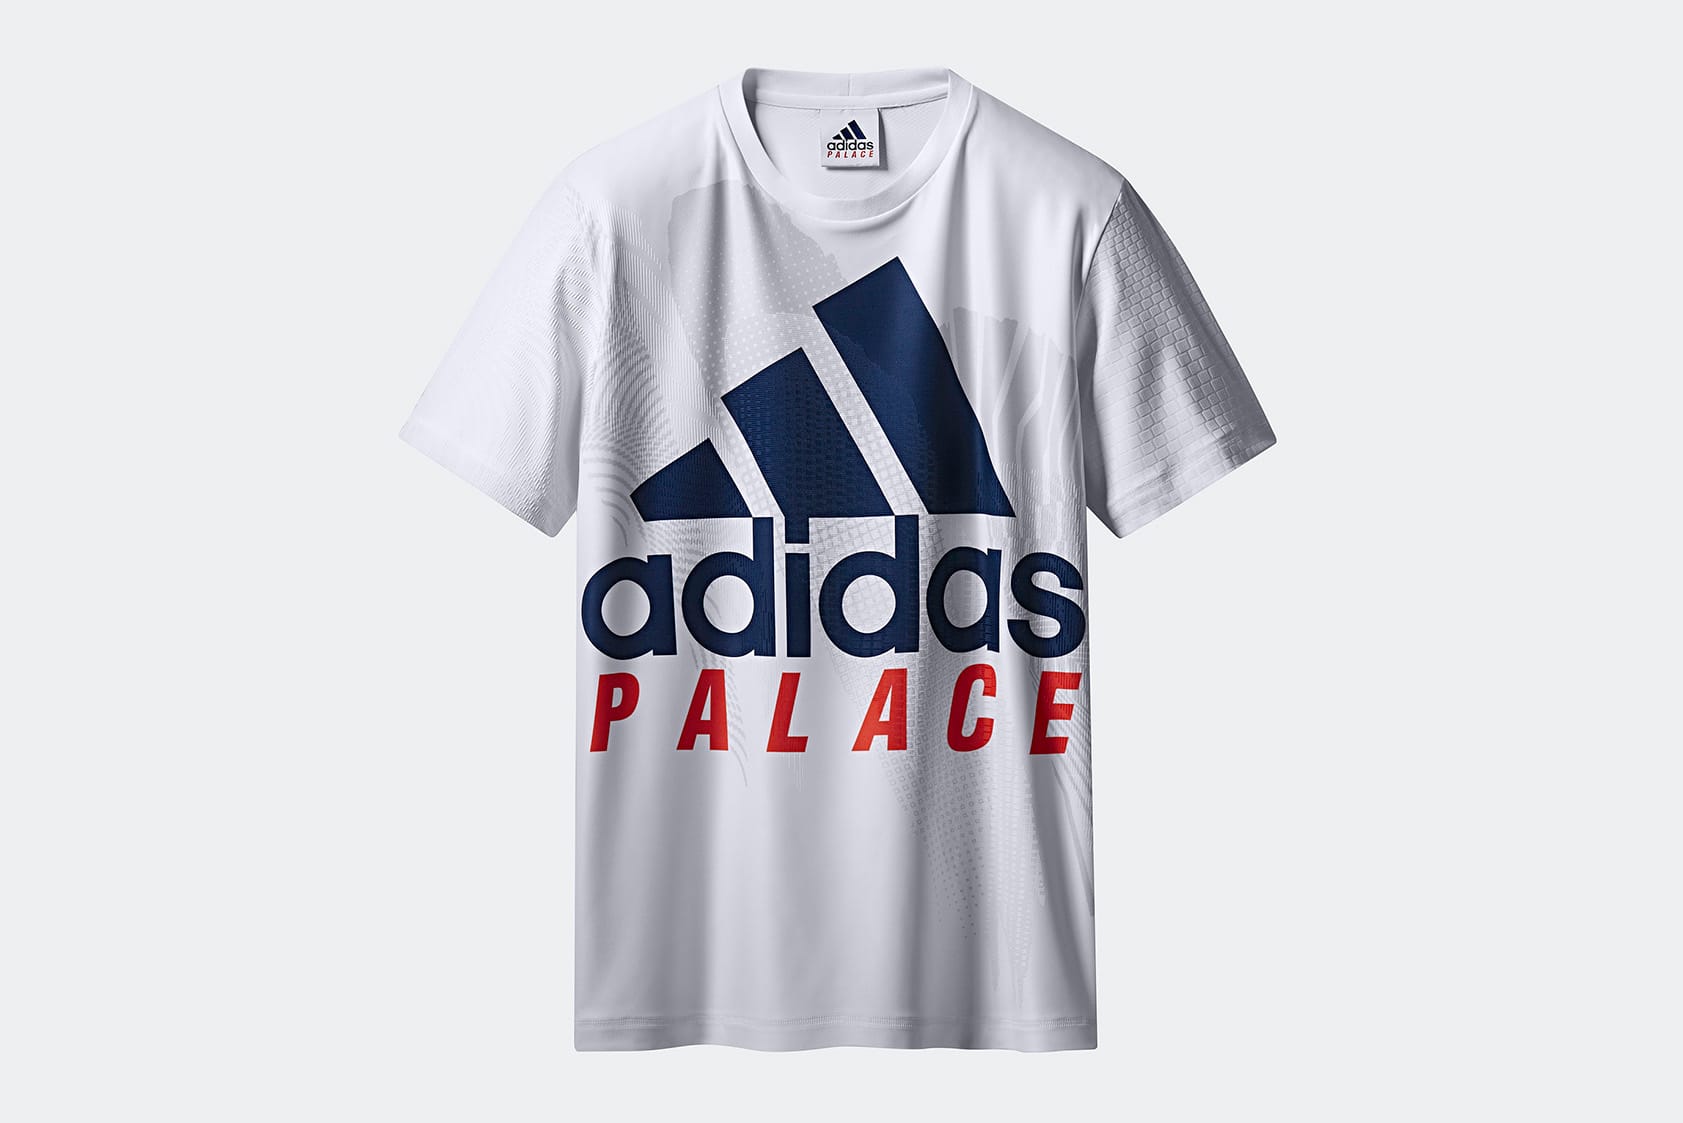 palace adidas 2018